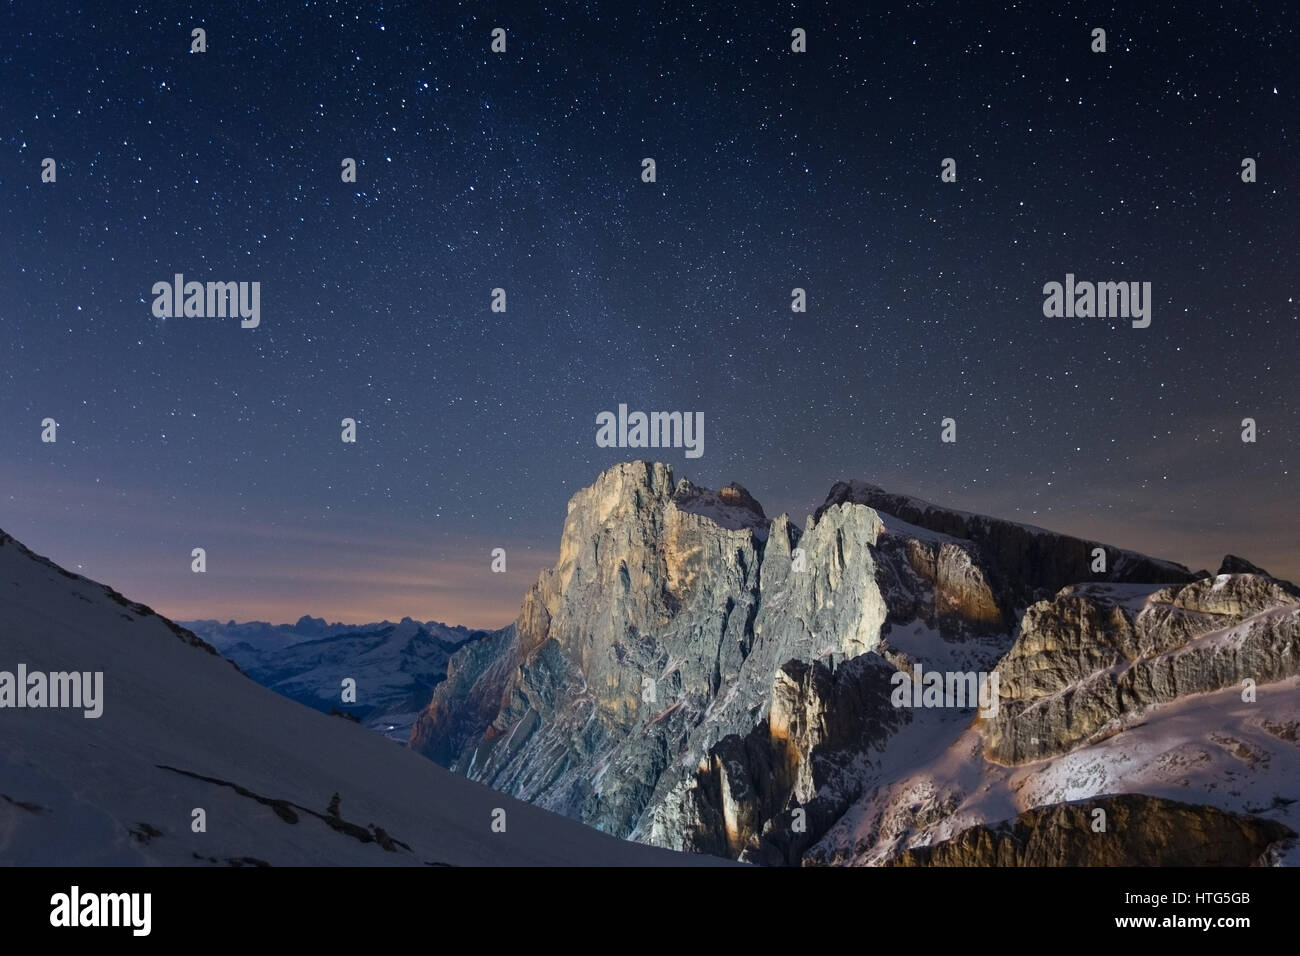 Cimon della Pala peak. The Pale di San Martino mountain group at night. Starry sky. The Dolomites of Trentino. Italian Alps. Europe. Stock Photo